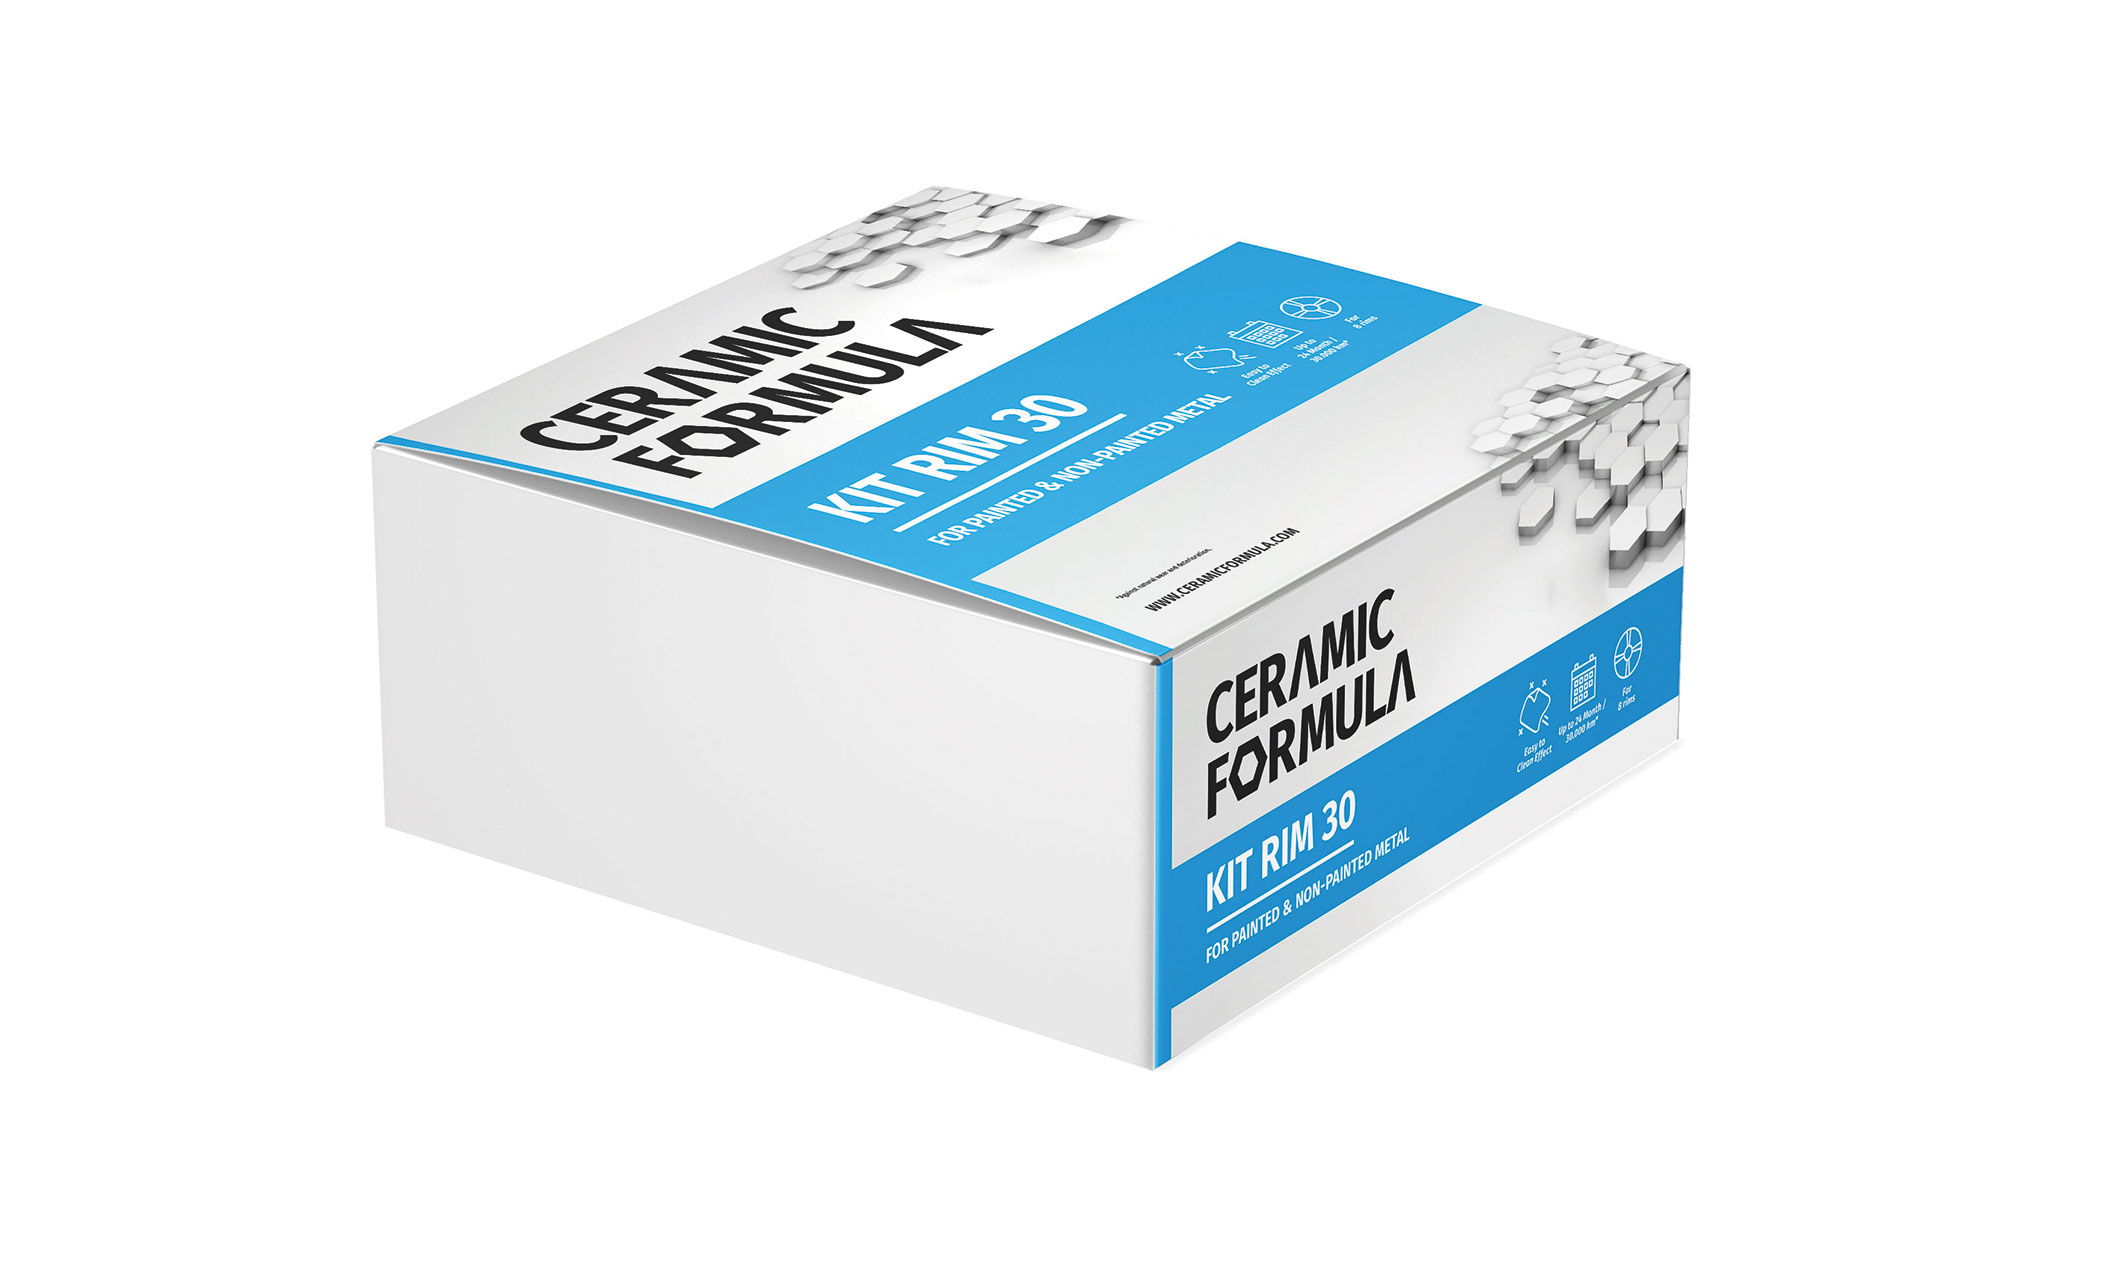 ceramic_formula_packaging_teamlemke_aache_2104x1264